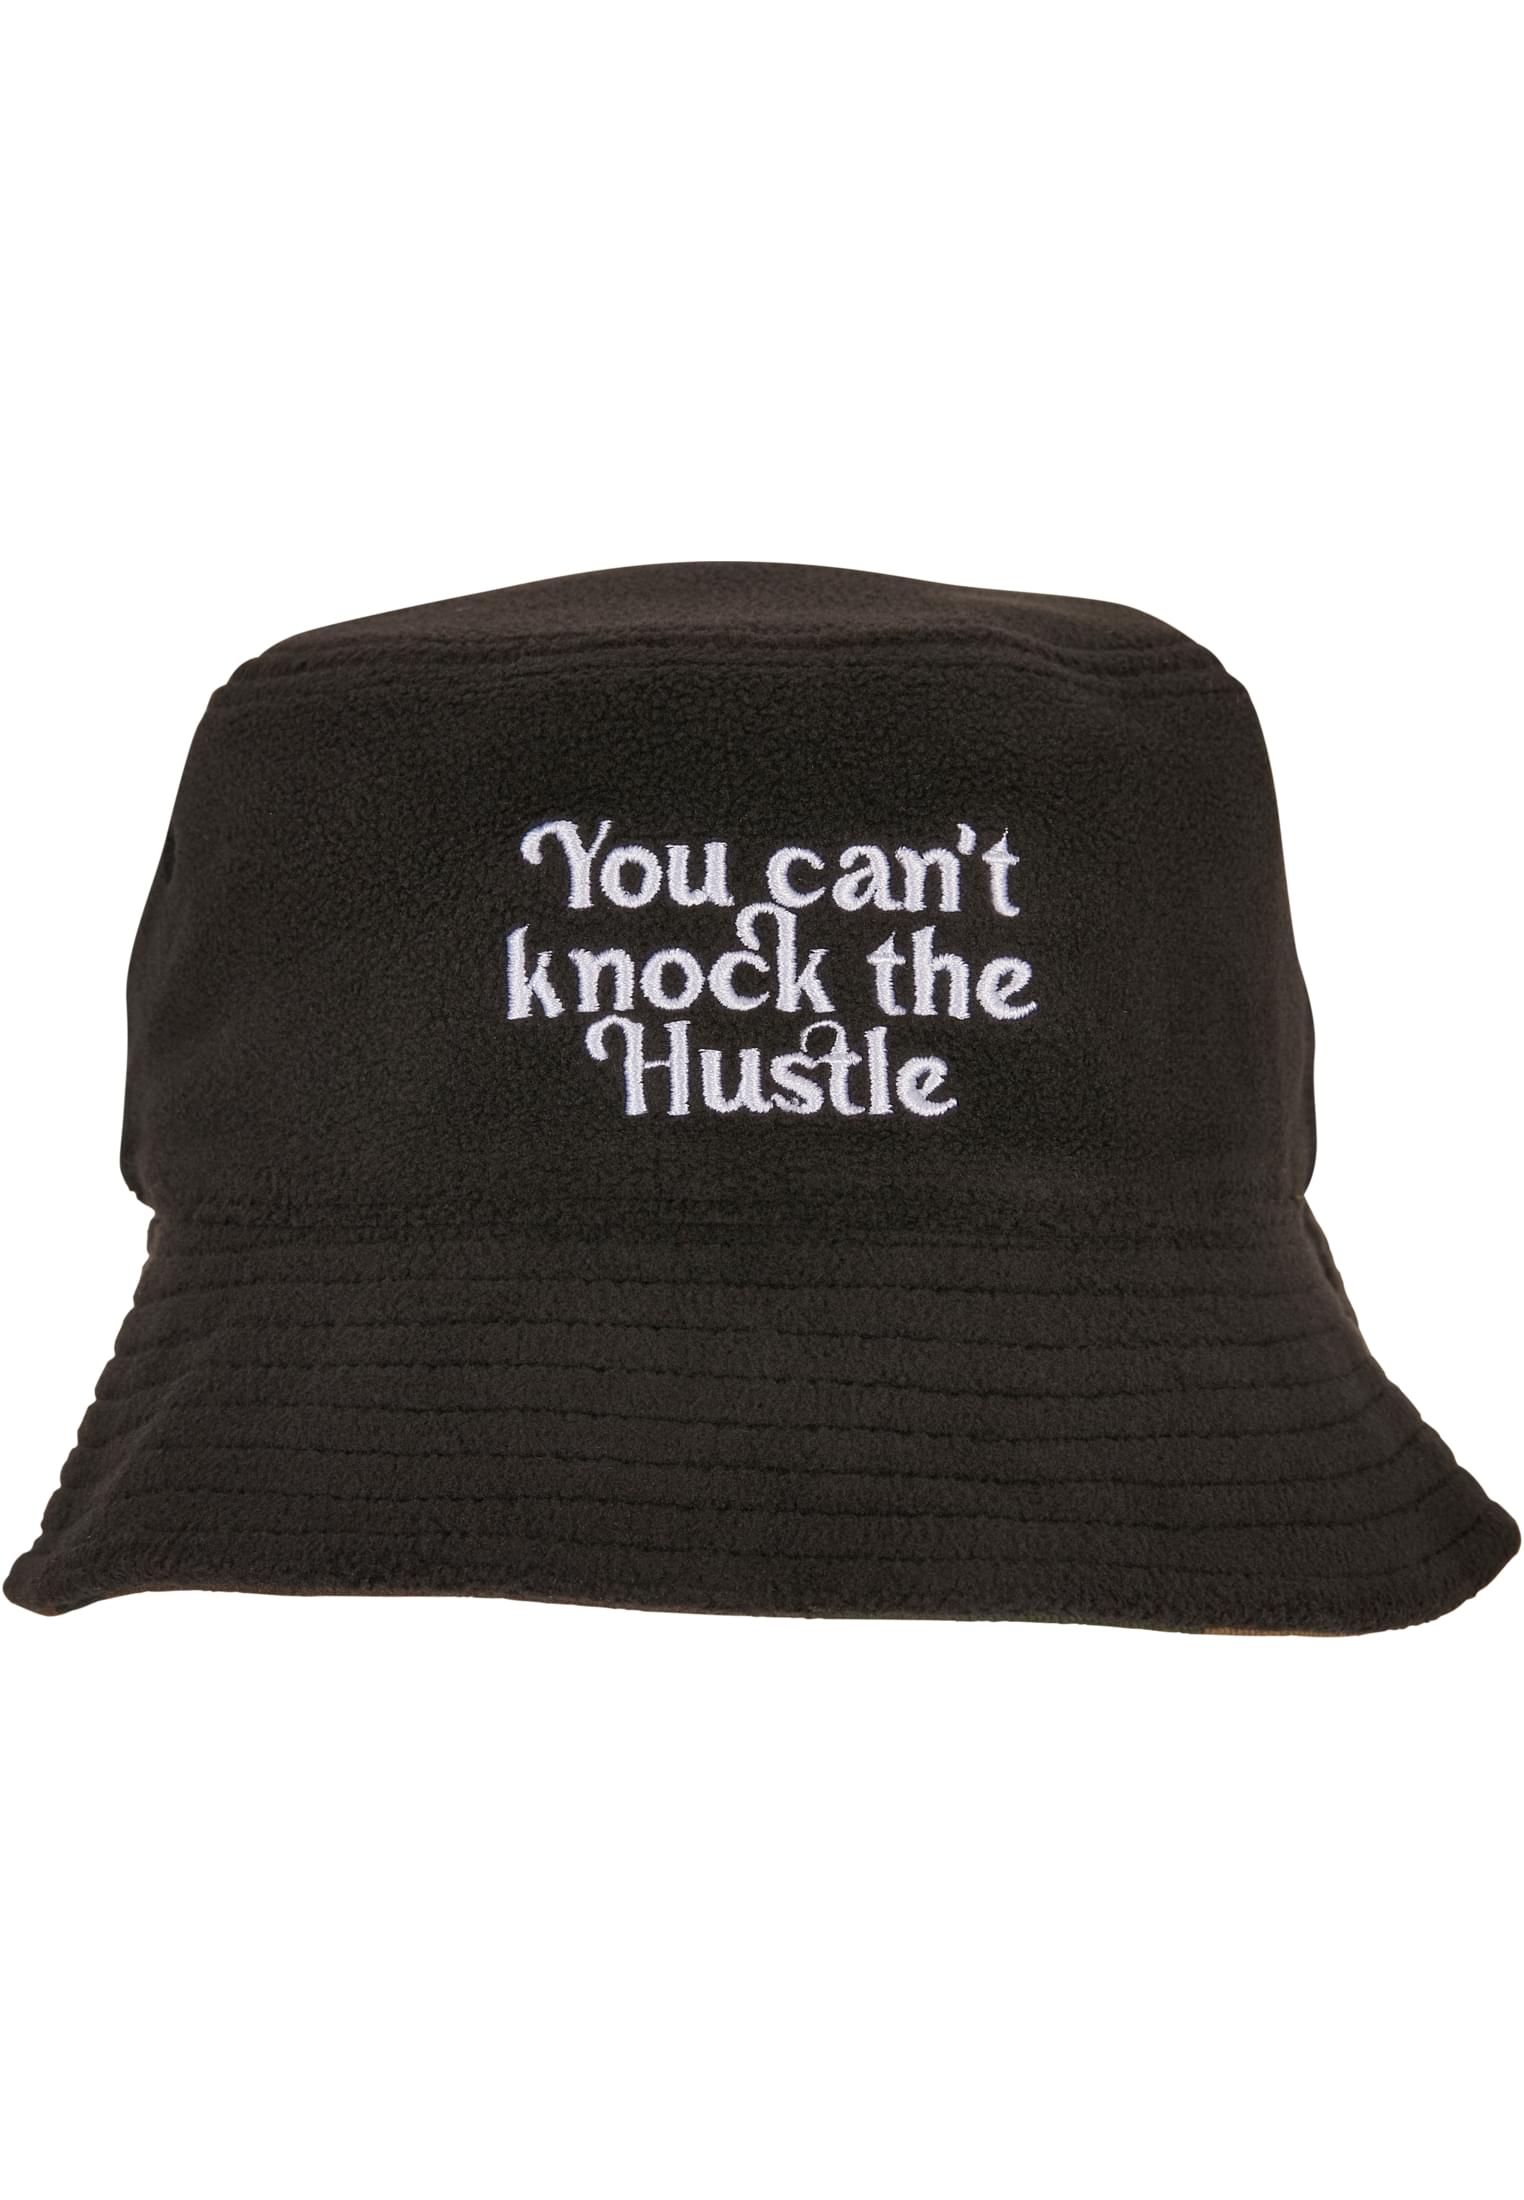 Knock the Hustle Bucket Hat woodland/black